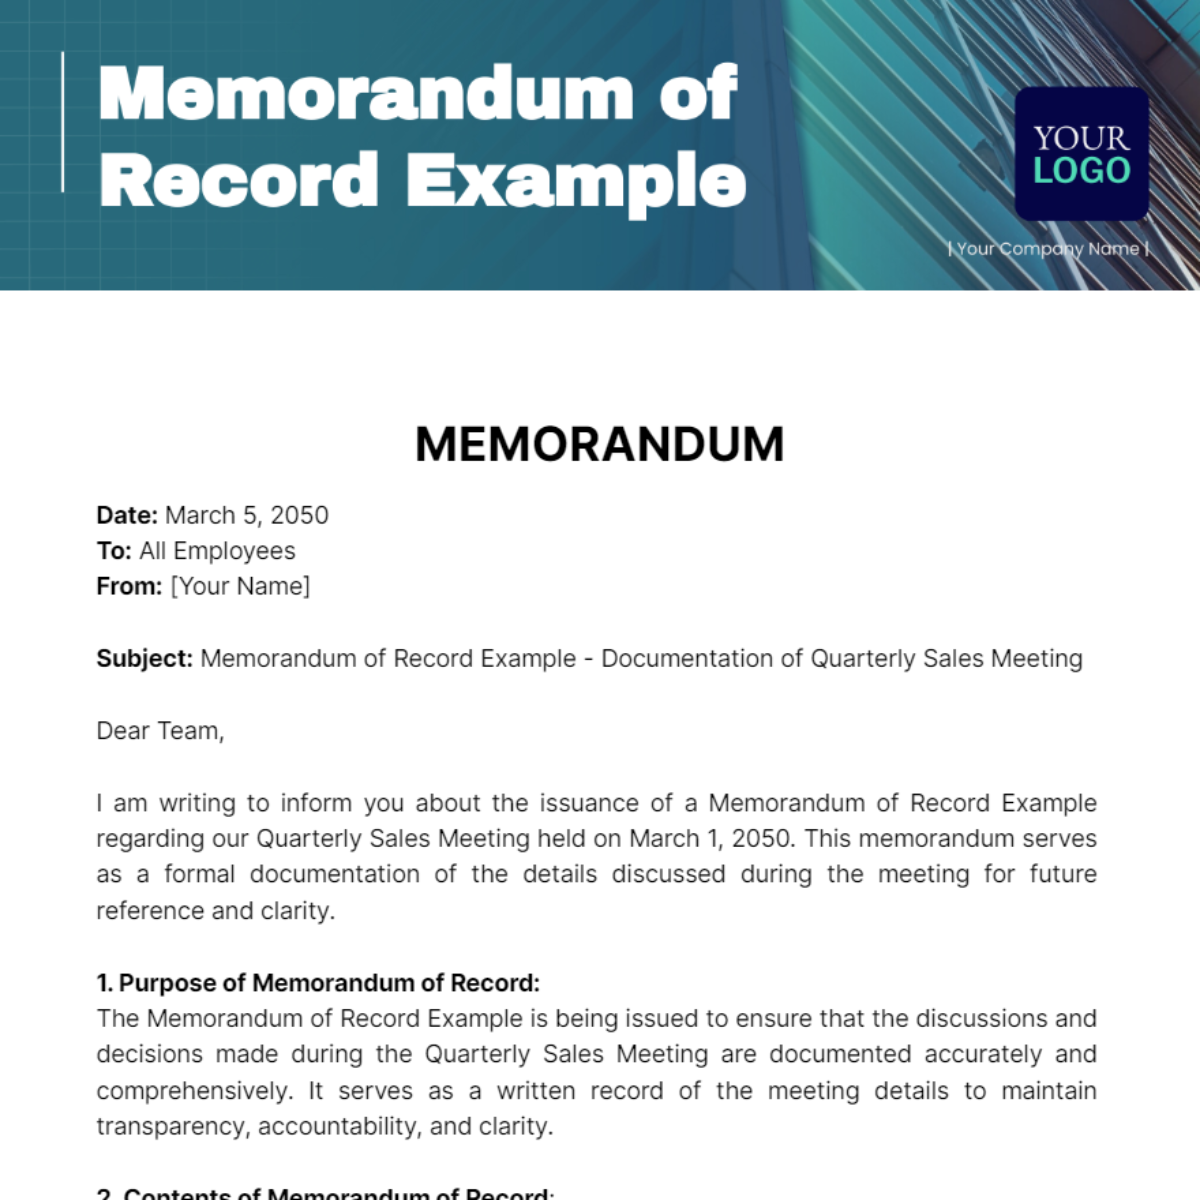 Memorandum of Record Example